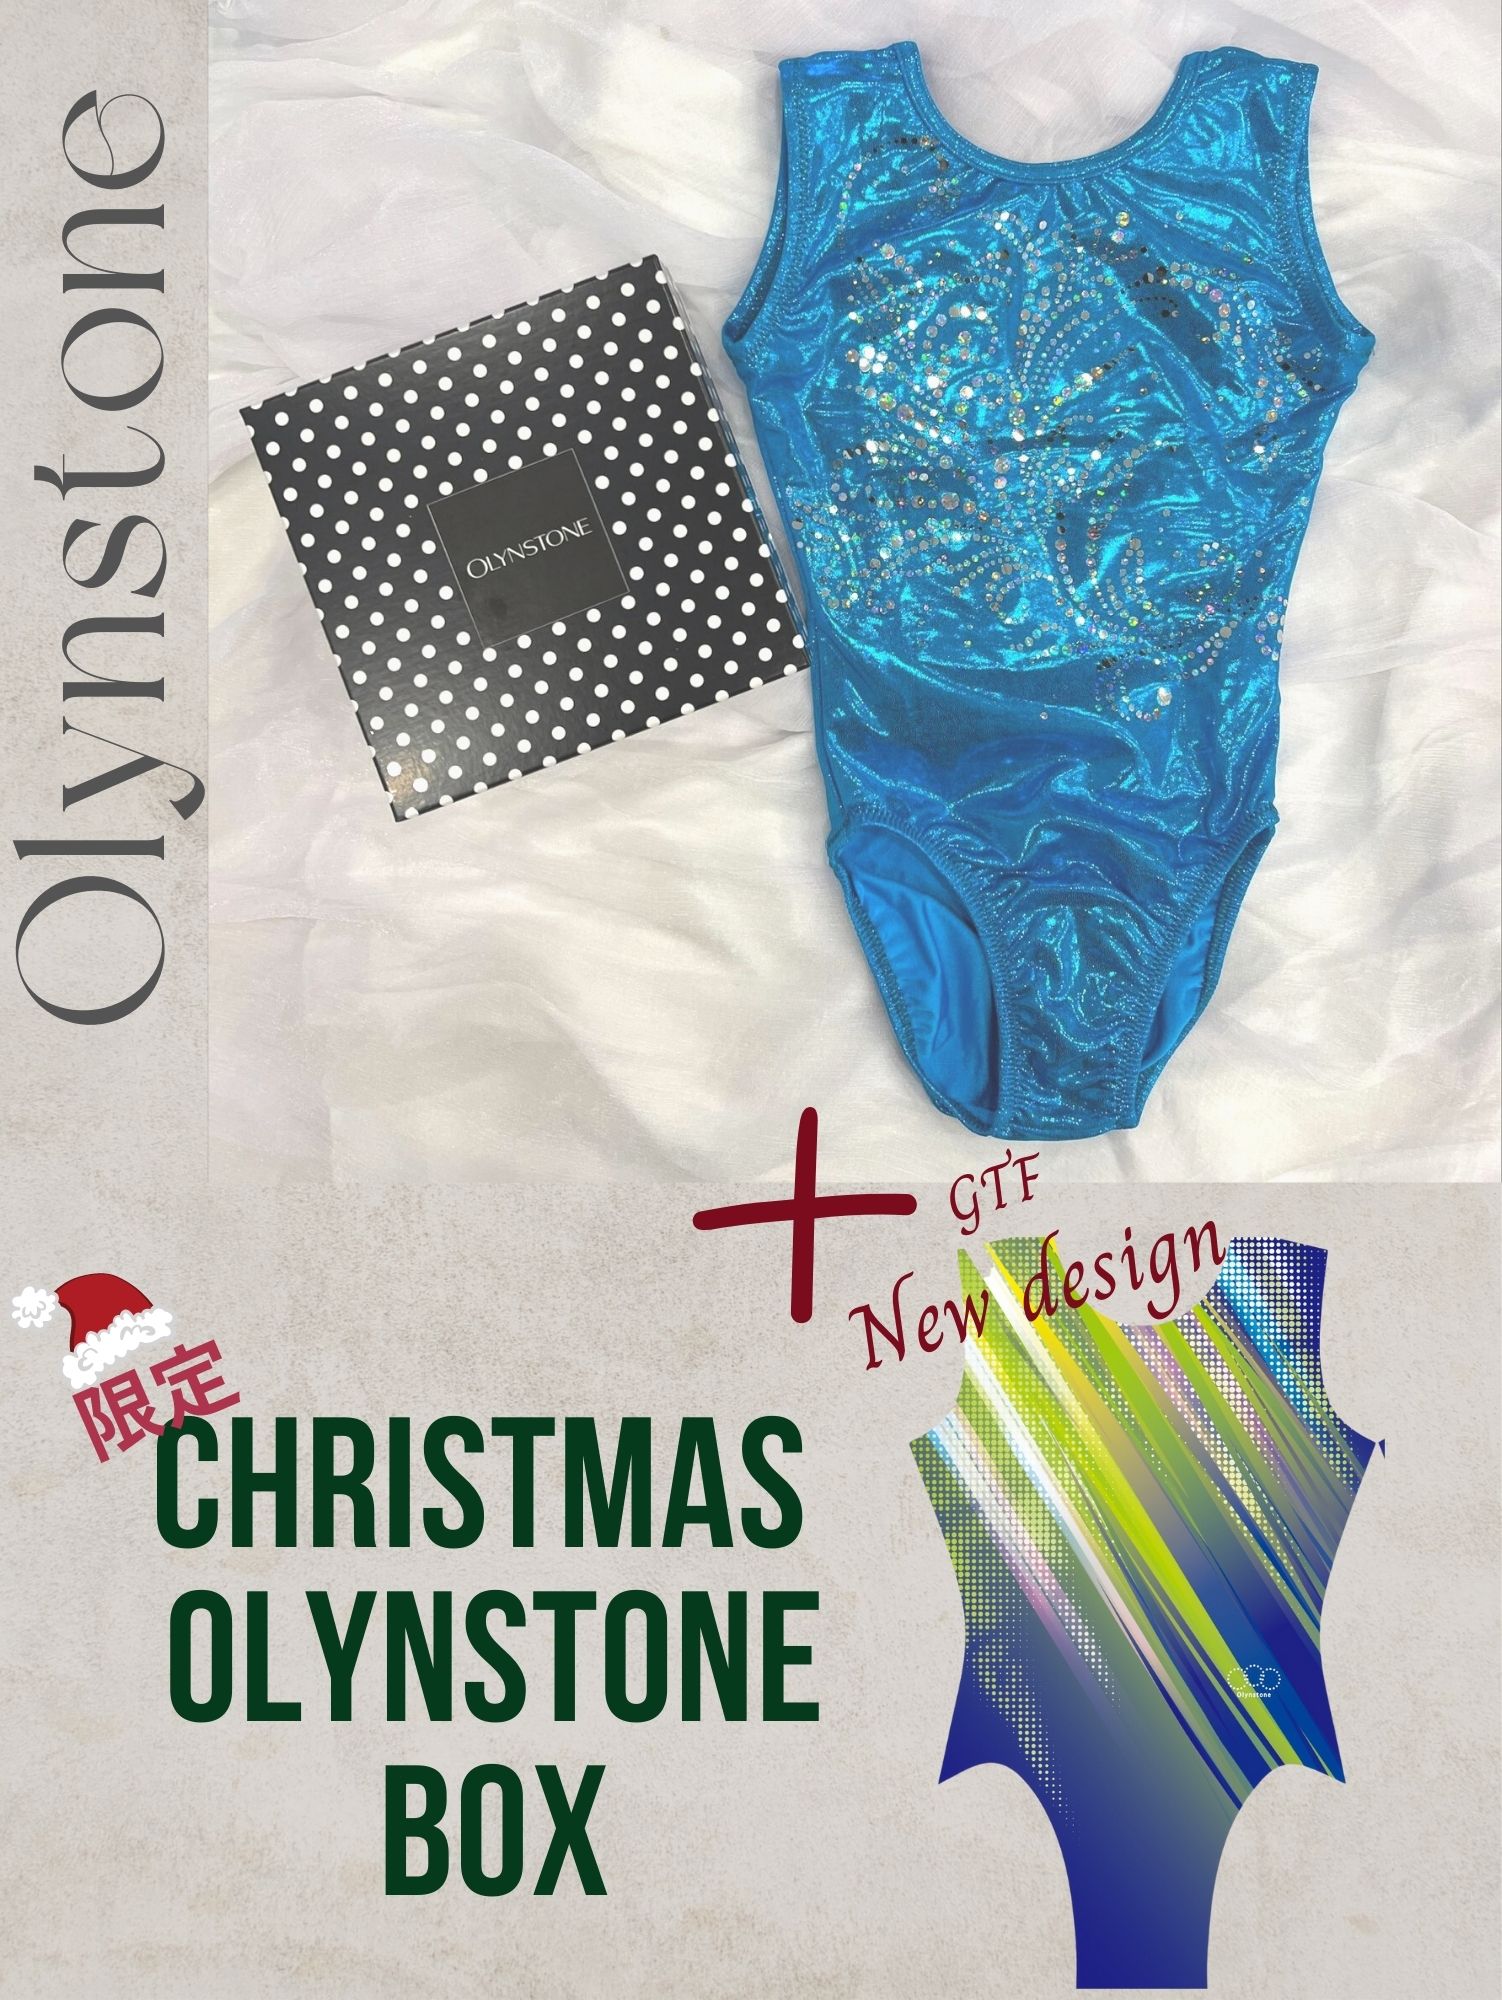 OL-GTE OLYNSTONE CHRISTMAS BOX Eセット